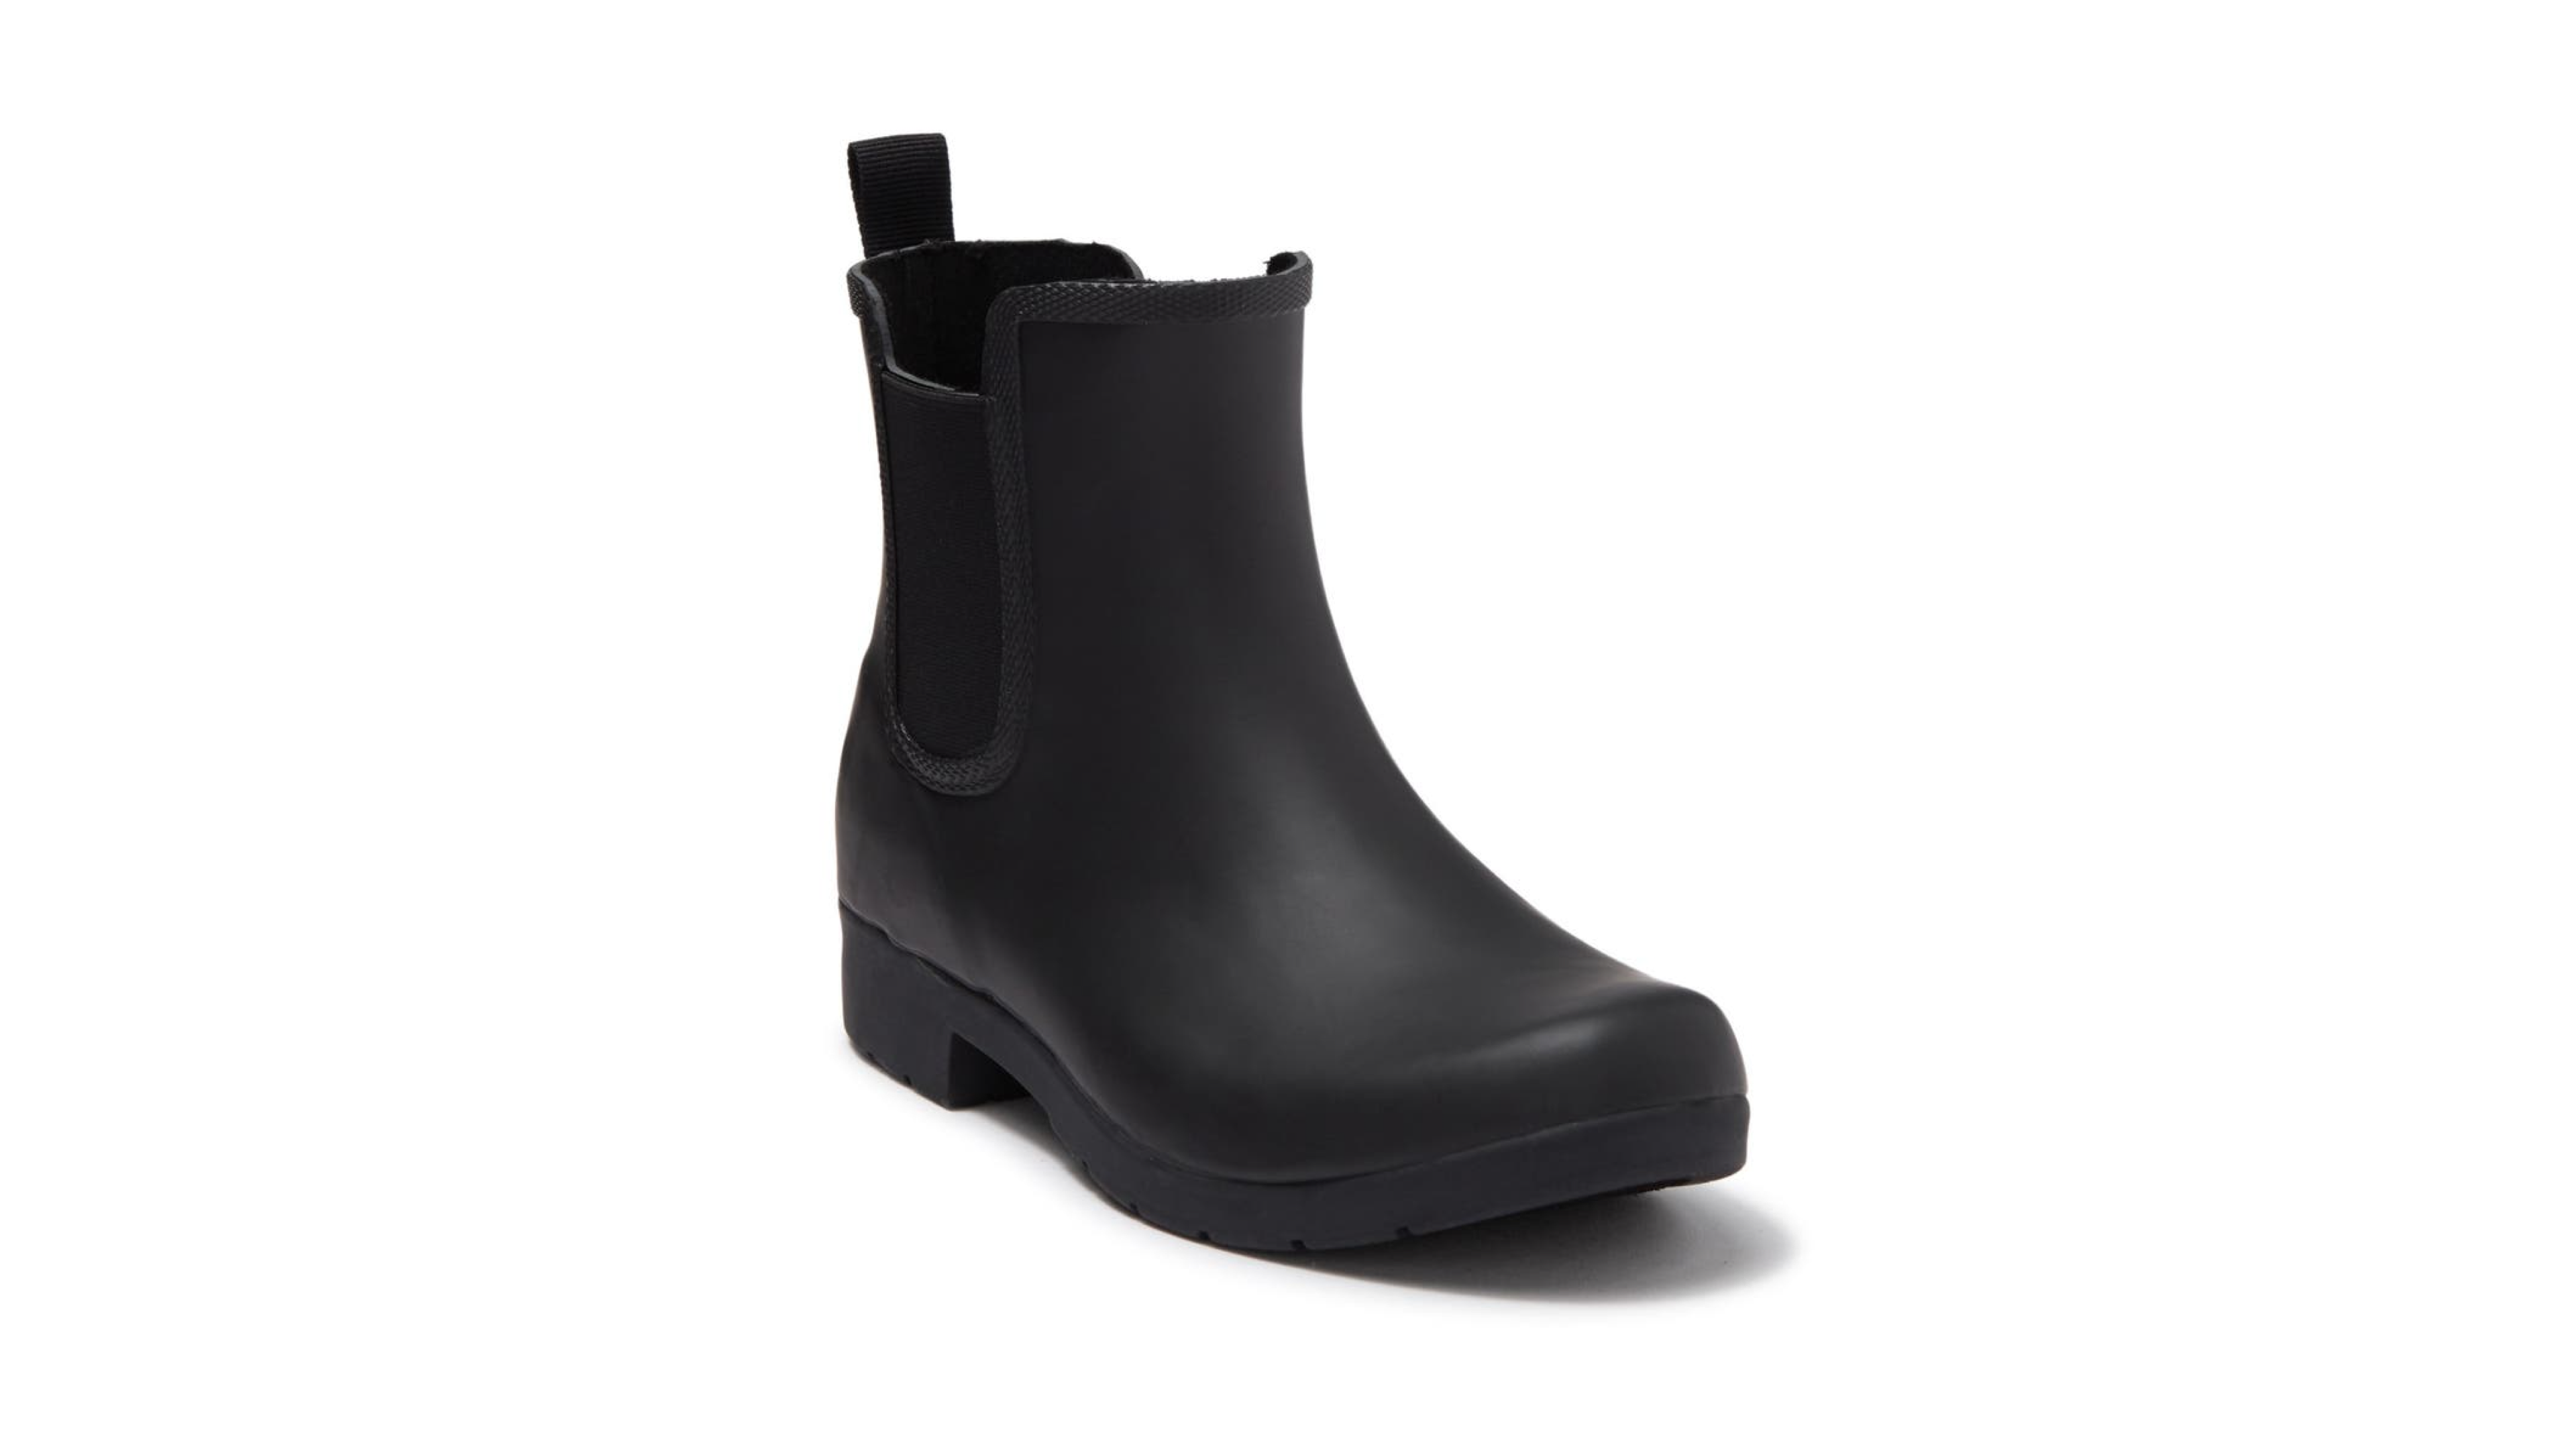 chelsea-style ankle-height black waterproof rain boots